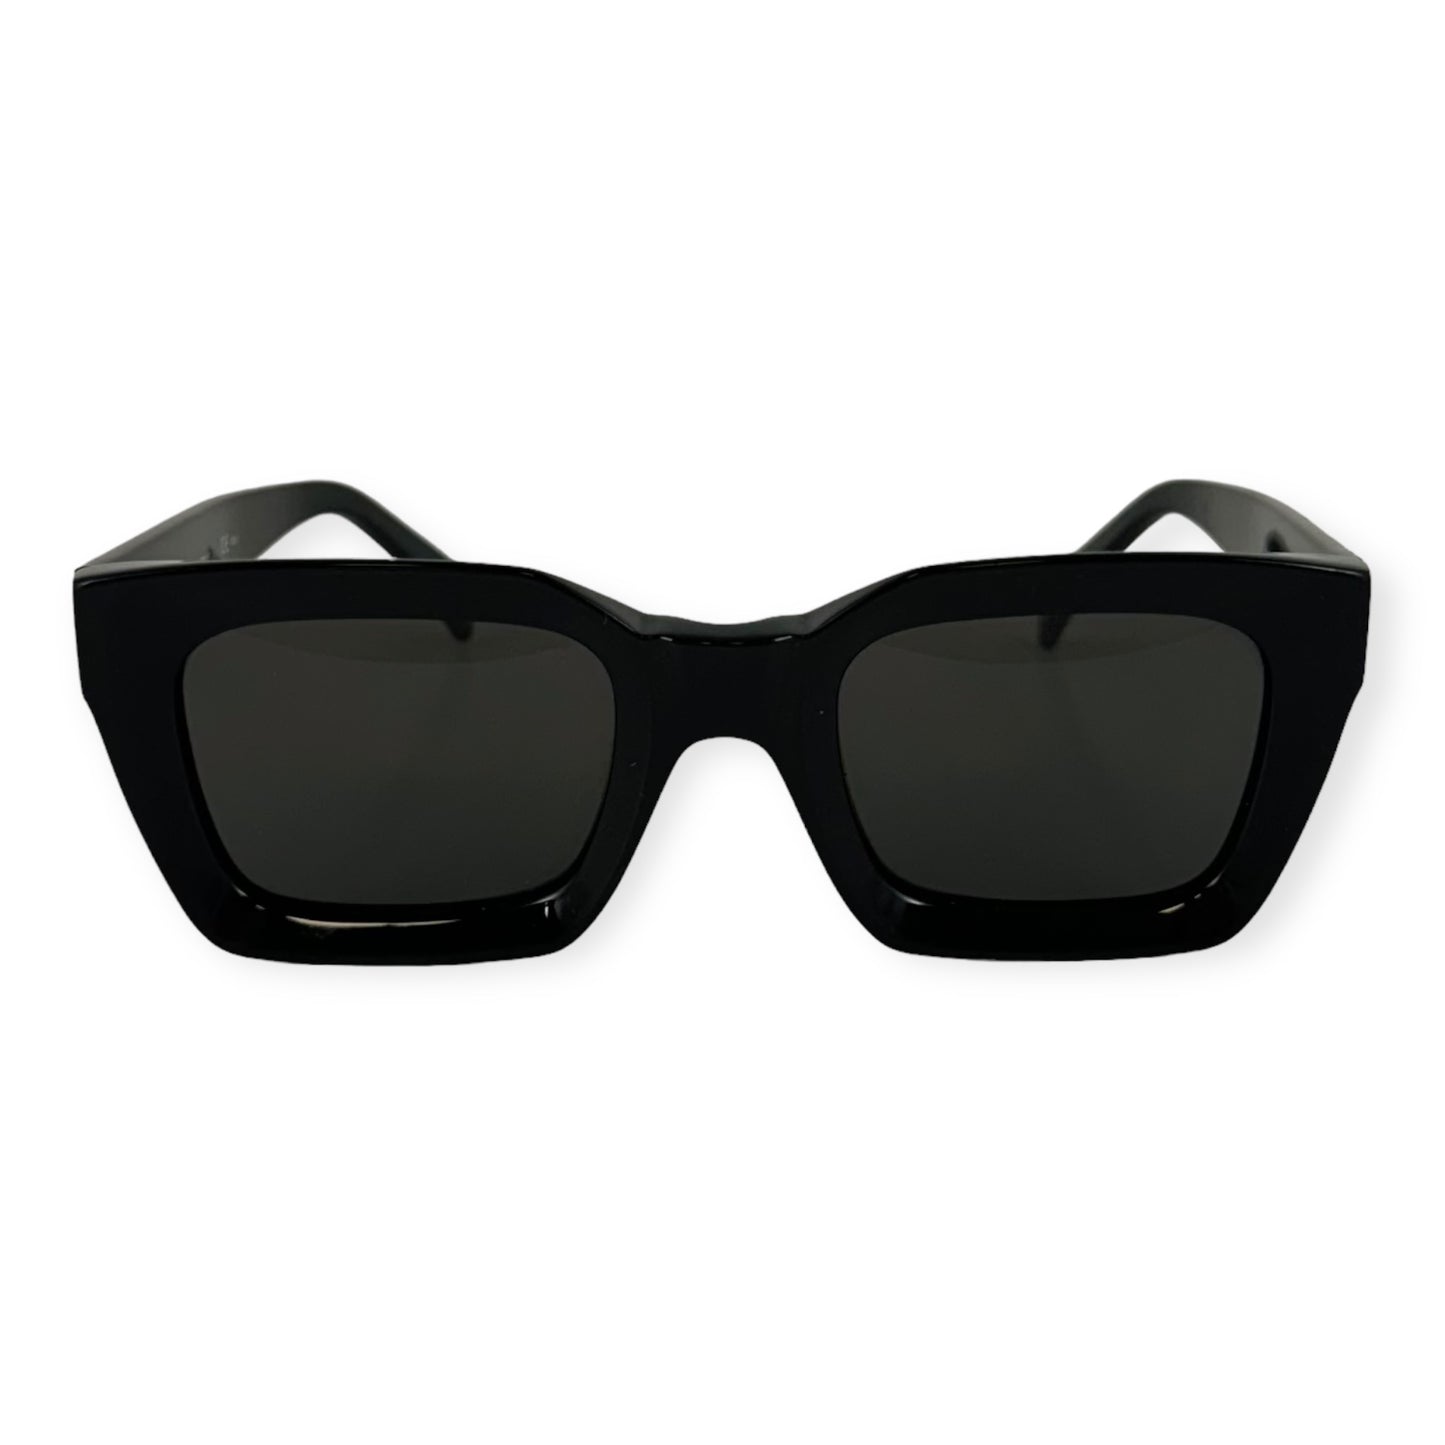 CELINE Wayfarer Sunglasses in Black